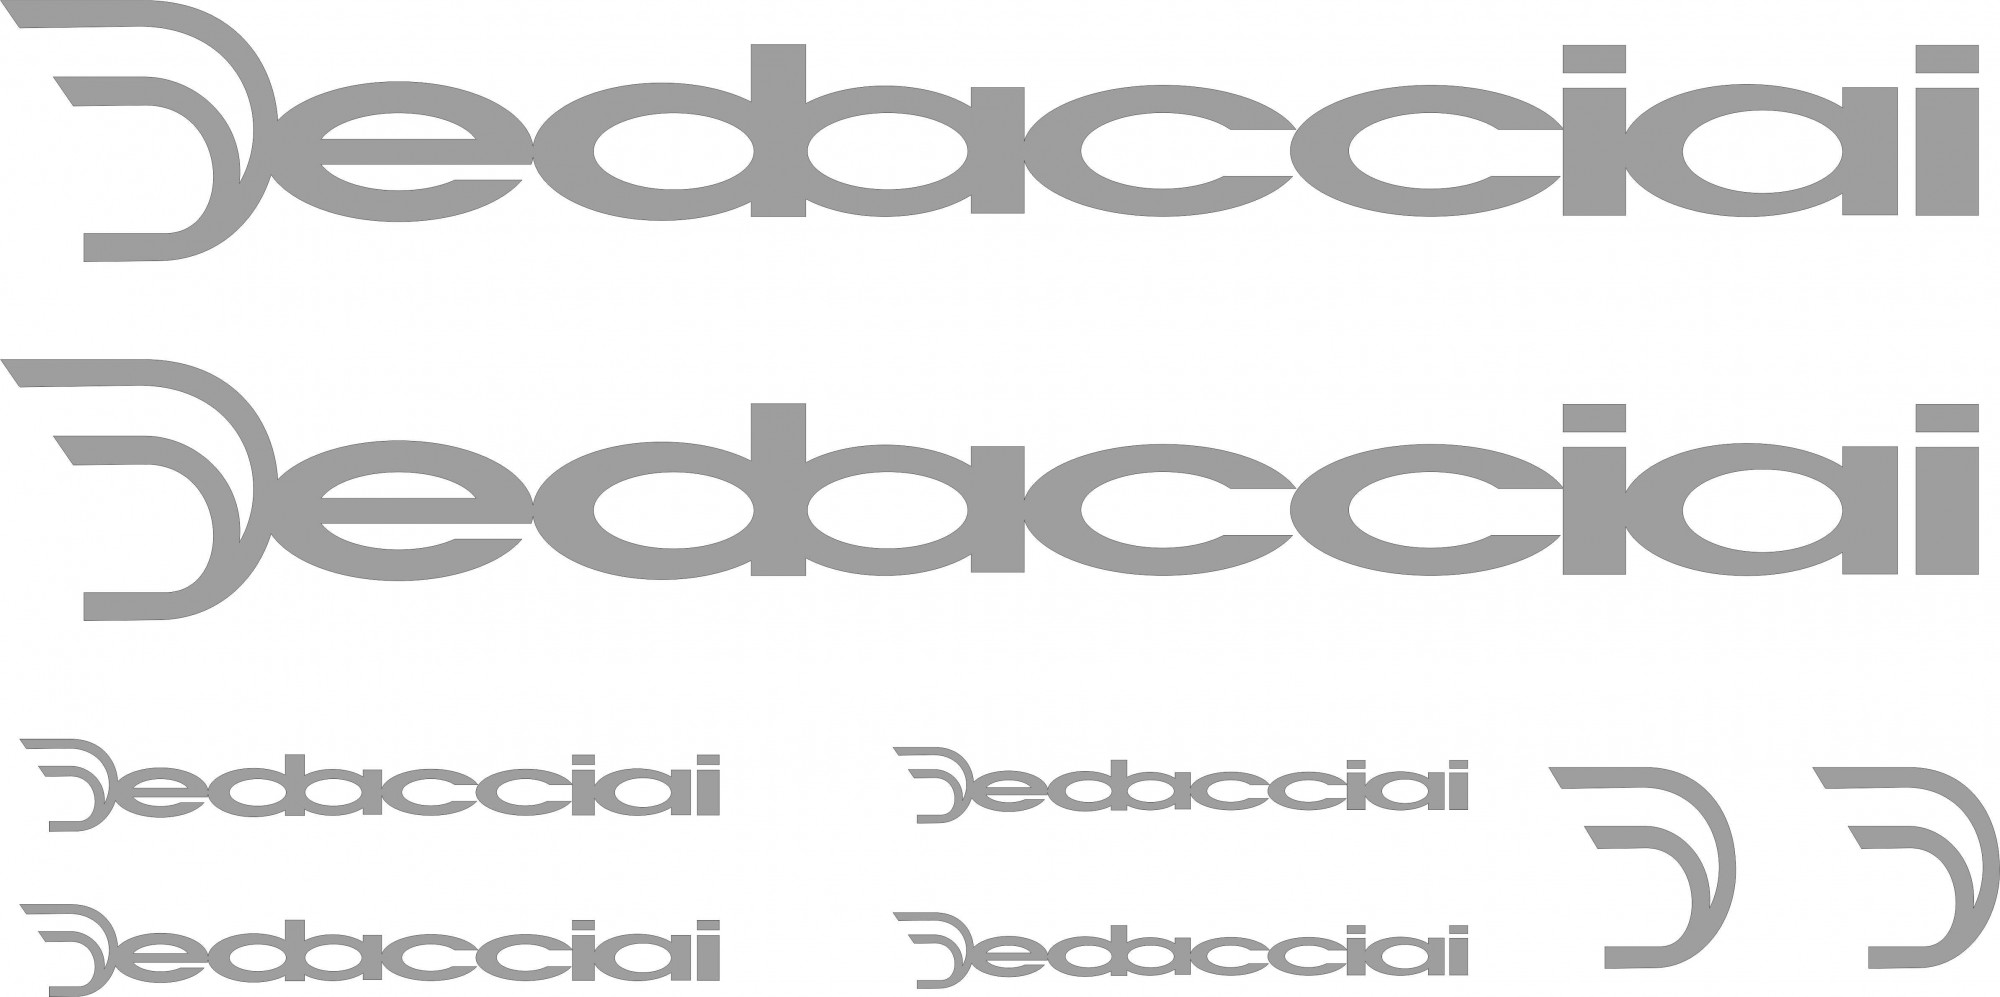 Dedacciai decal set choices frame and forks 